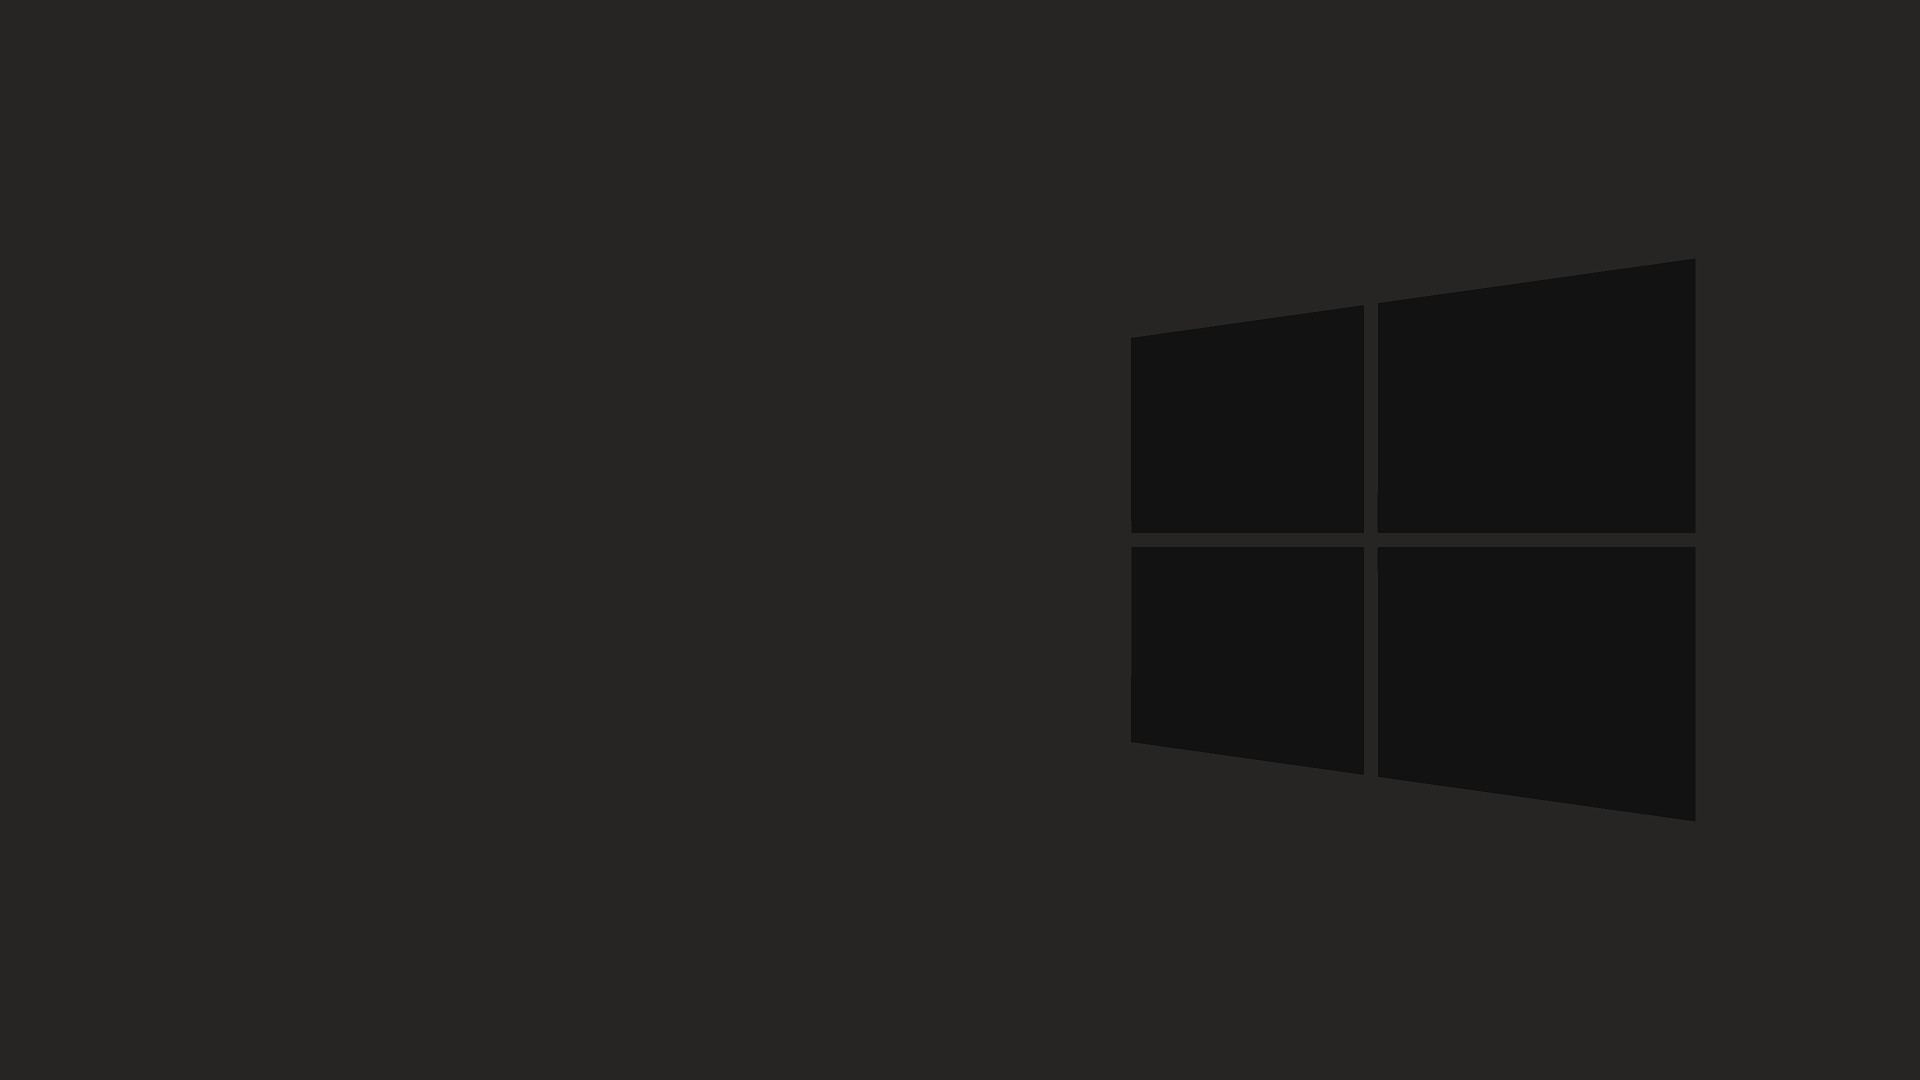 1920x1080 [1080P]Minimal Windows 10 wallpaper. 4K in comments.